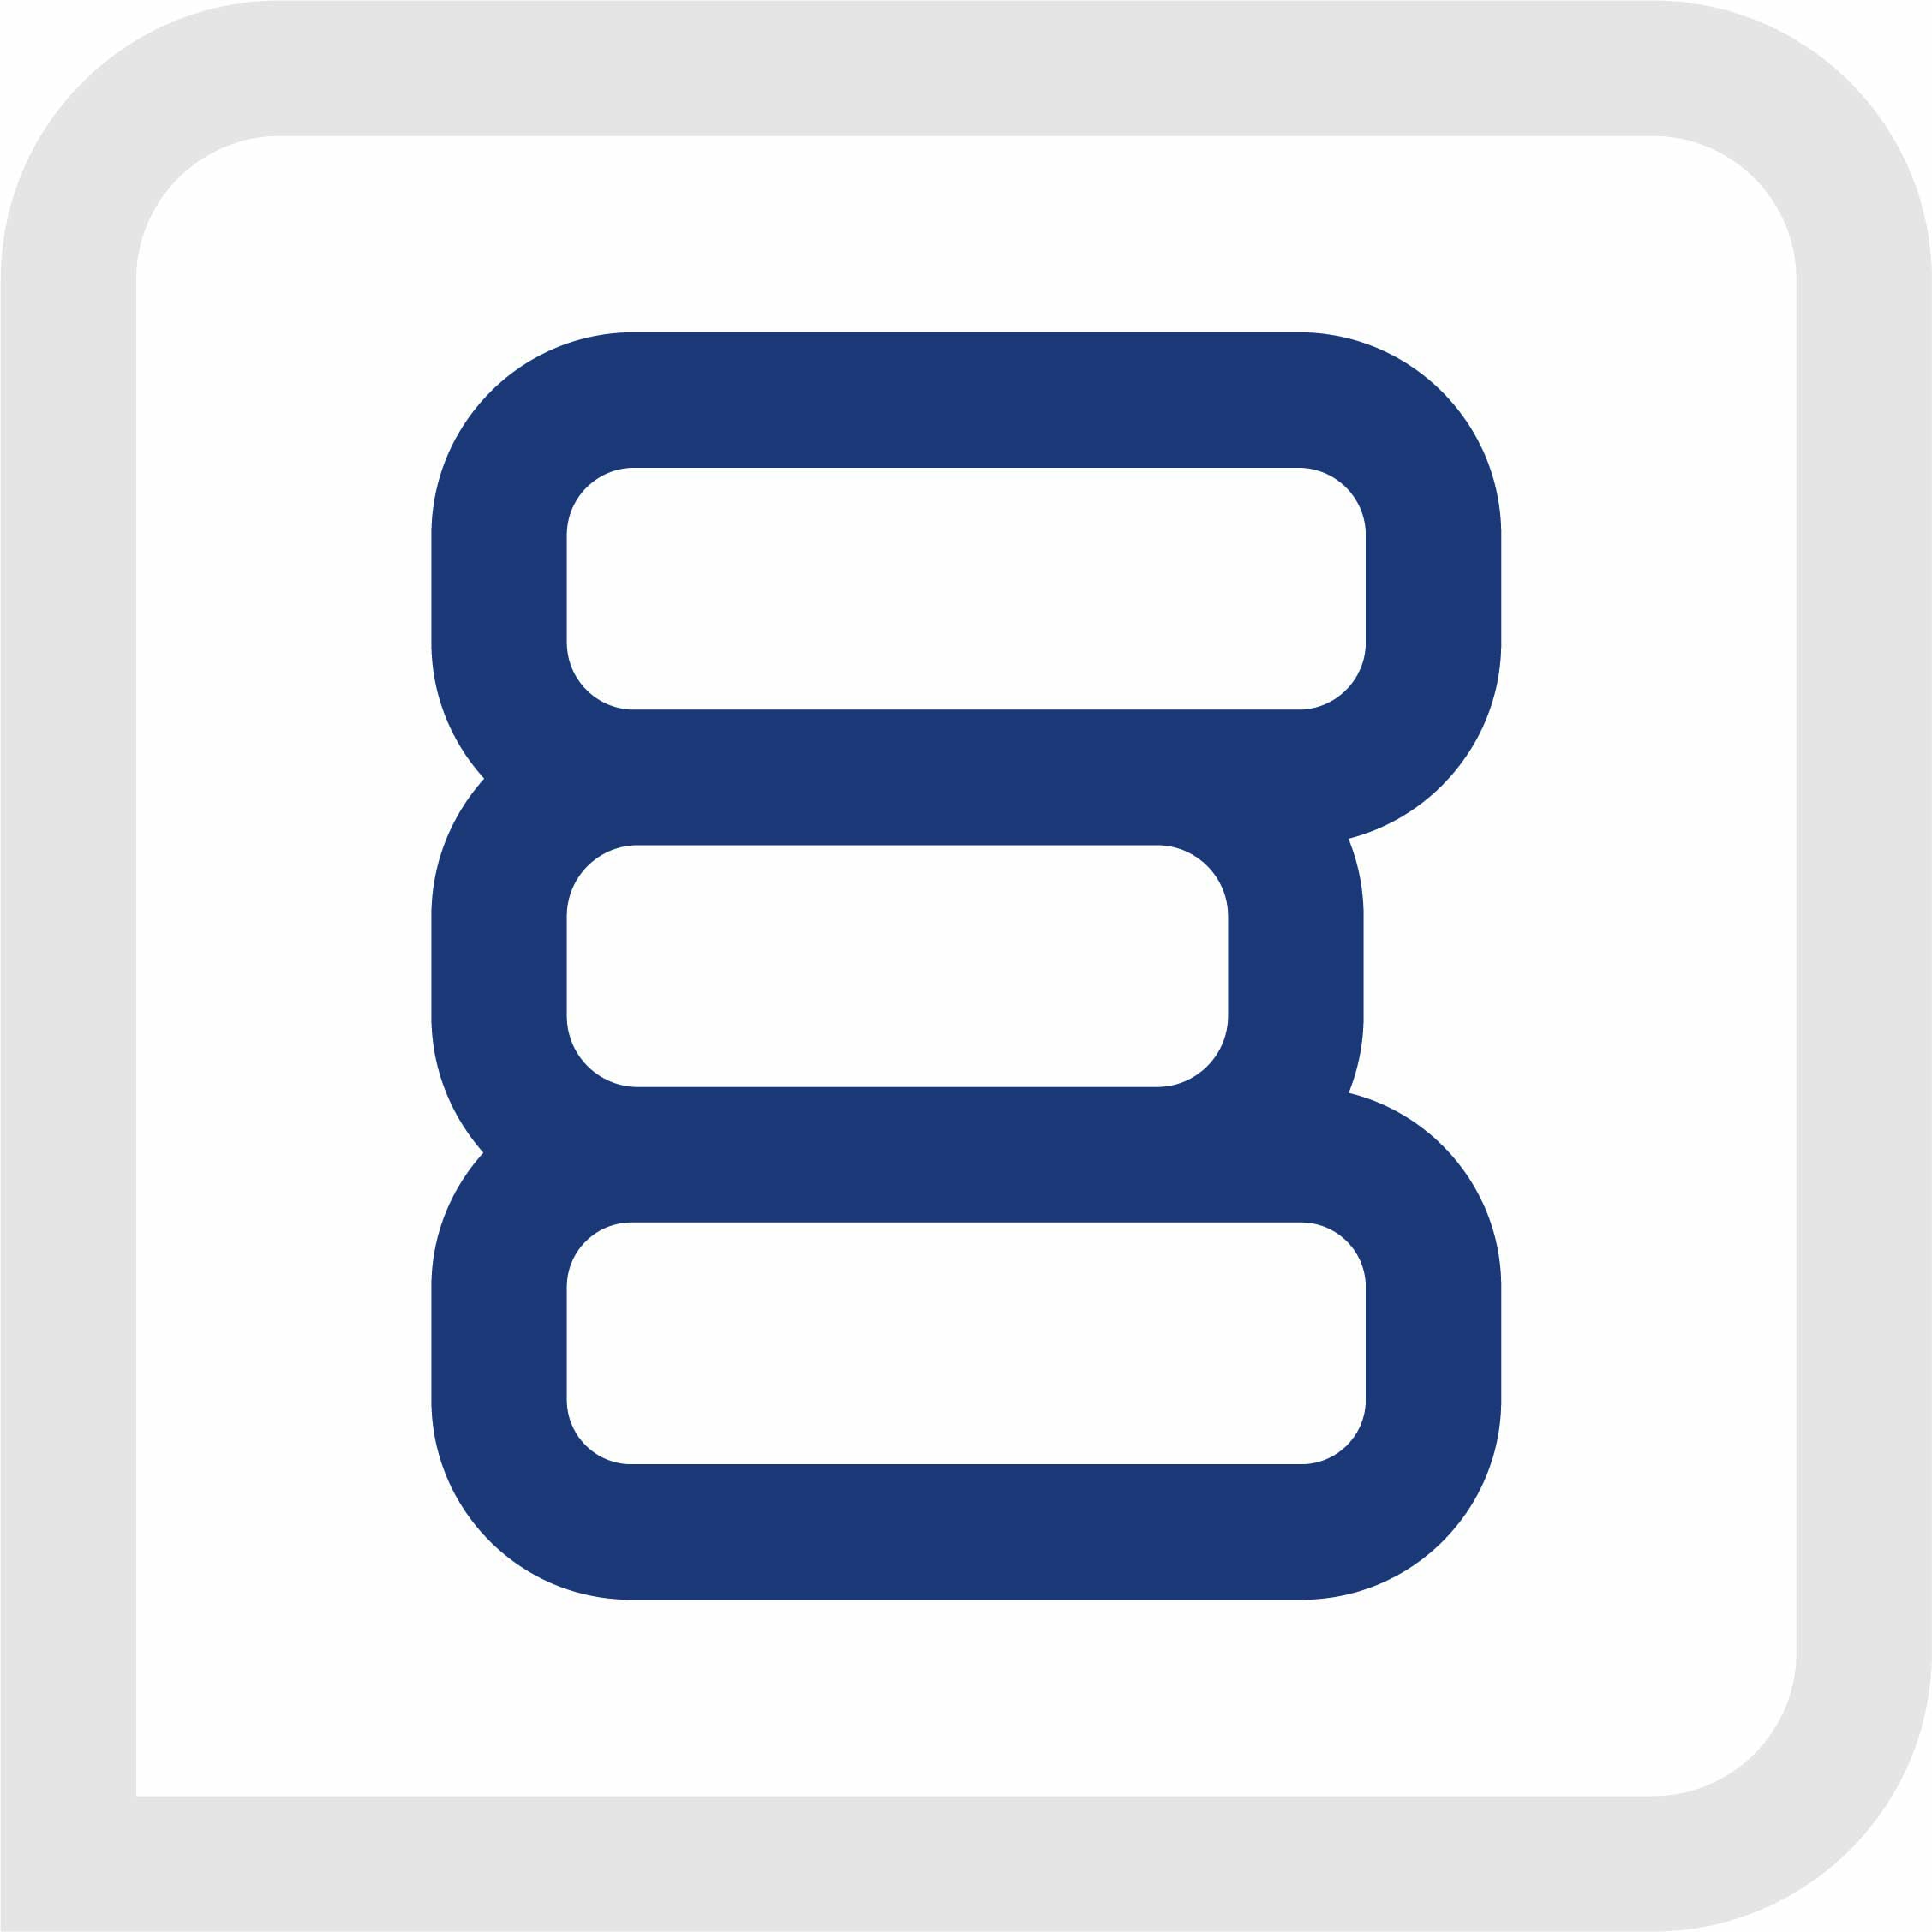 Edge logo 2.0